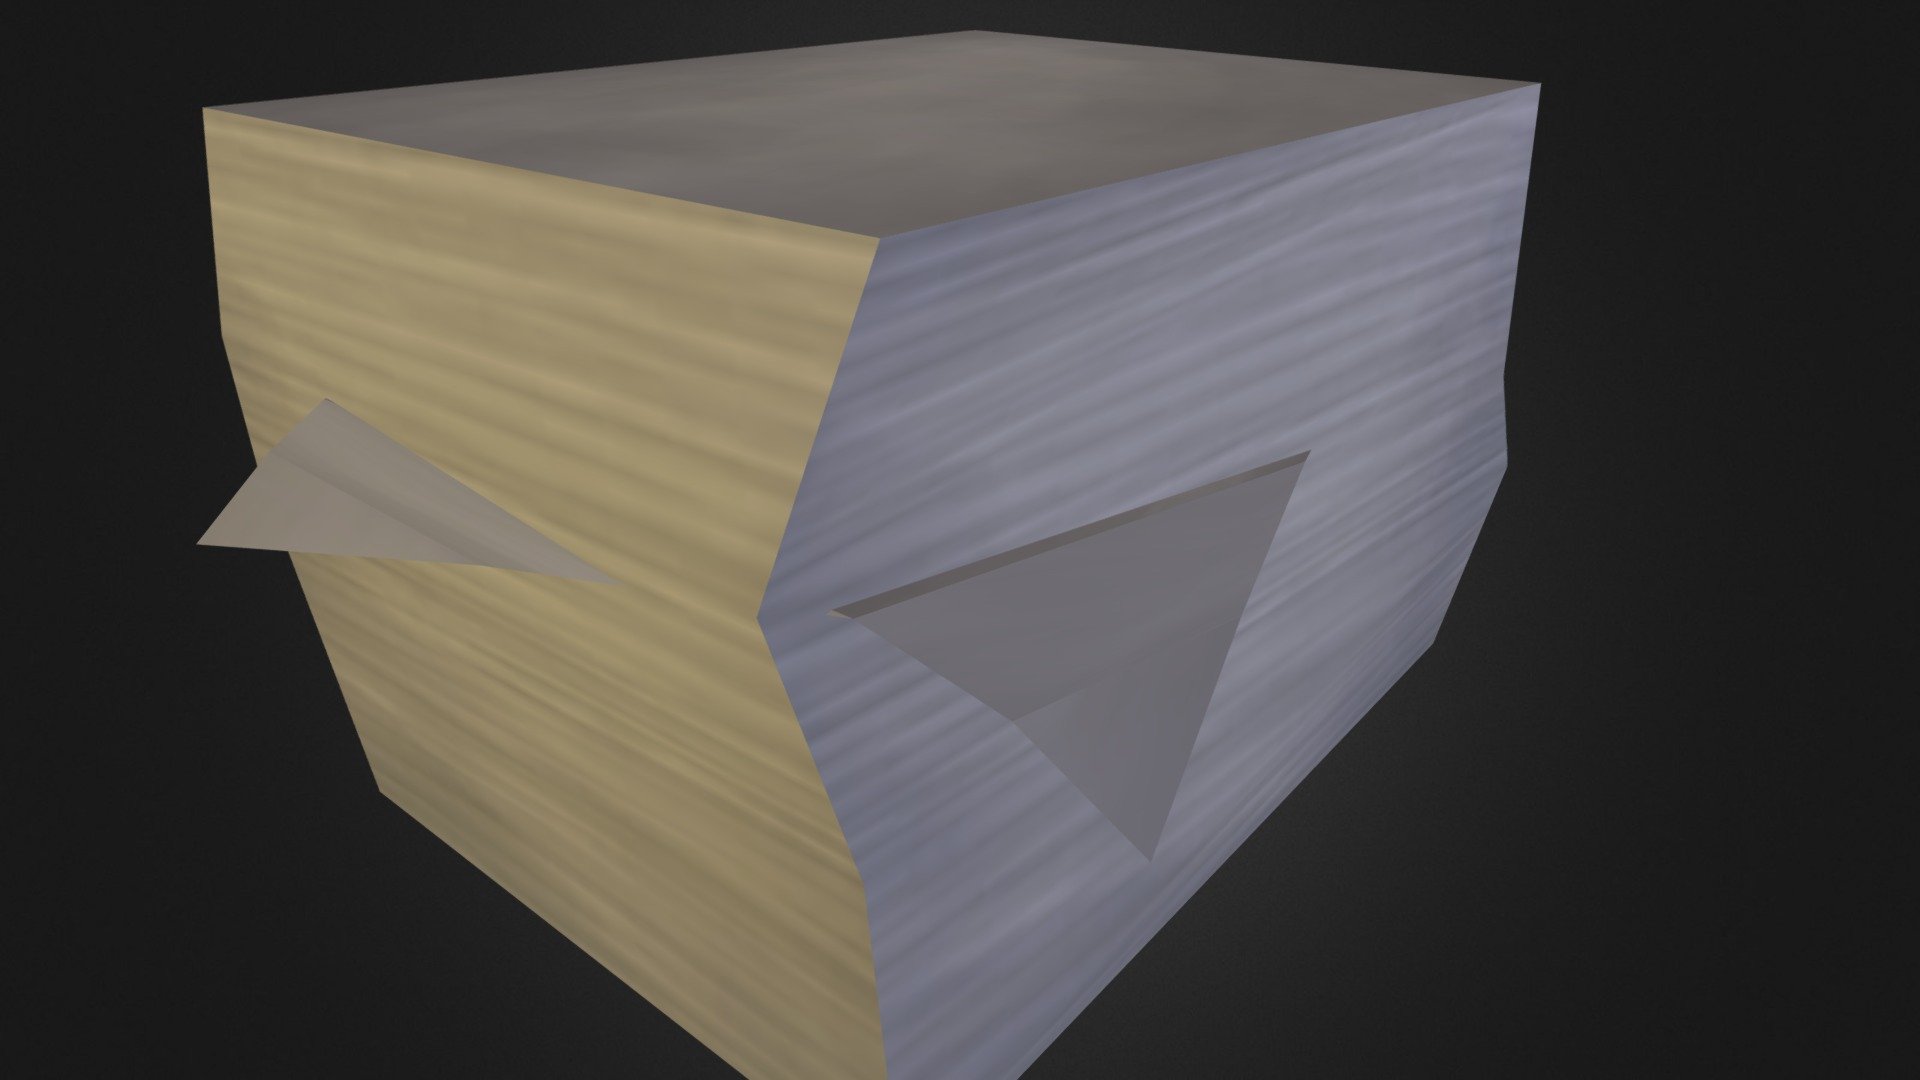 Matthew_selby_Pile of paper 3.zip - 3D model by Warkscol 3d model